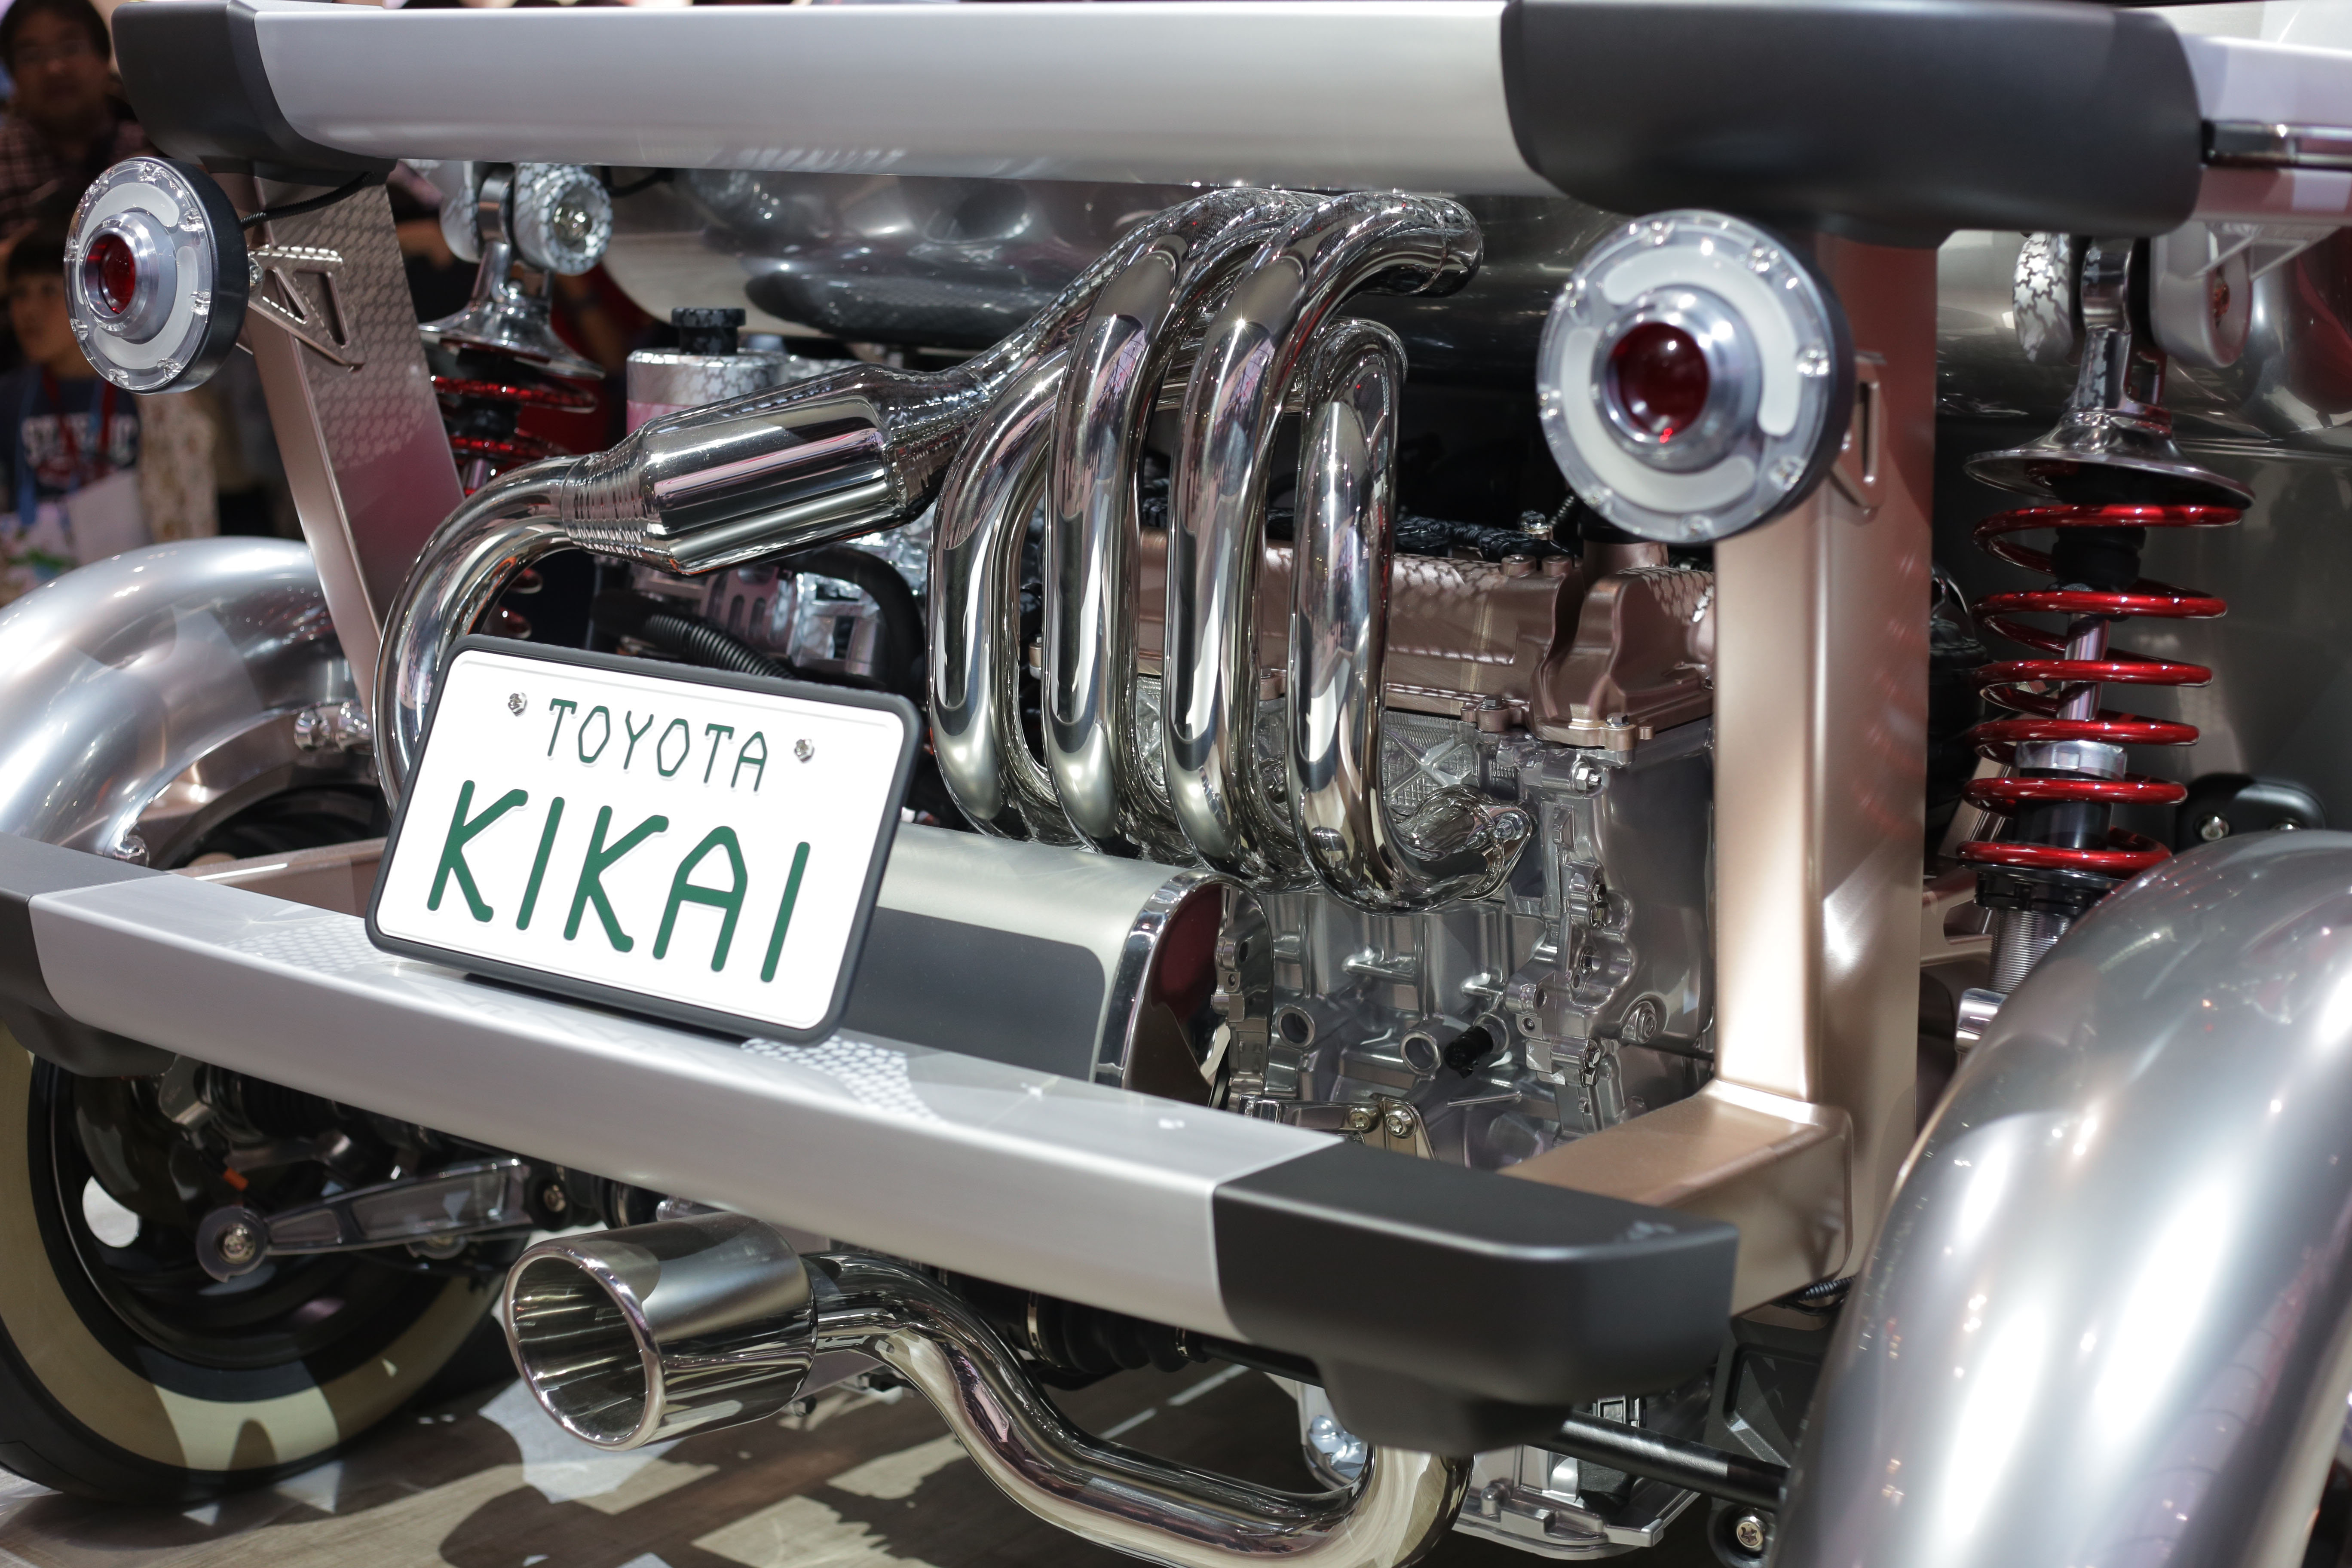 KiKai Engine